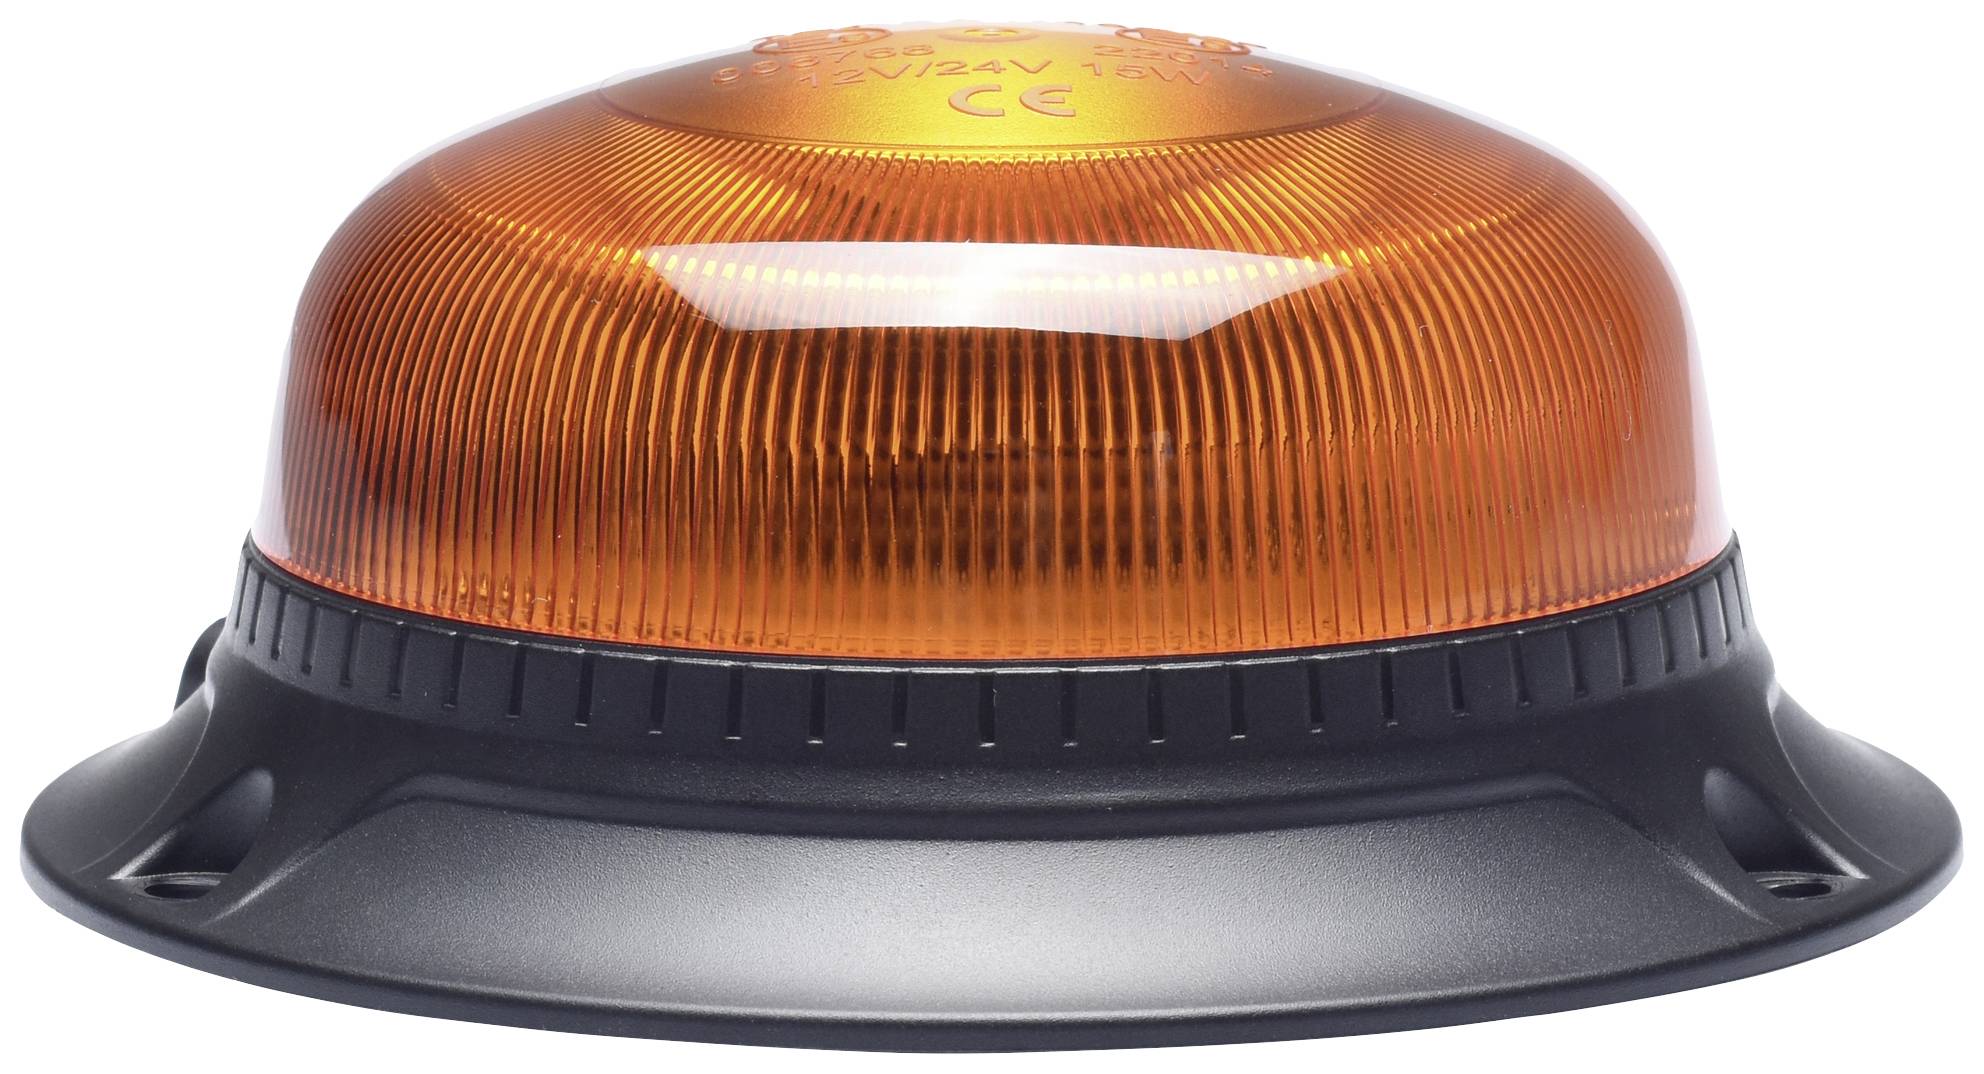 Berger & Schröter Rundumleuchte LED Mini RKL fest 20305 12 V/DC, 24 V/DC  Normhalter flexibel, Normhalter Orange, BERGER & SCHRÖTER